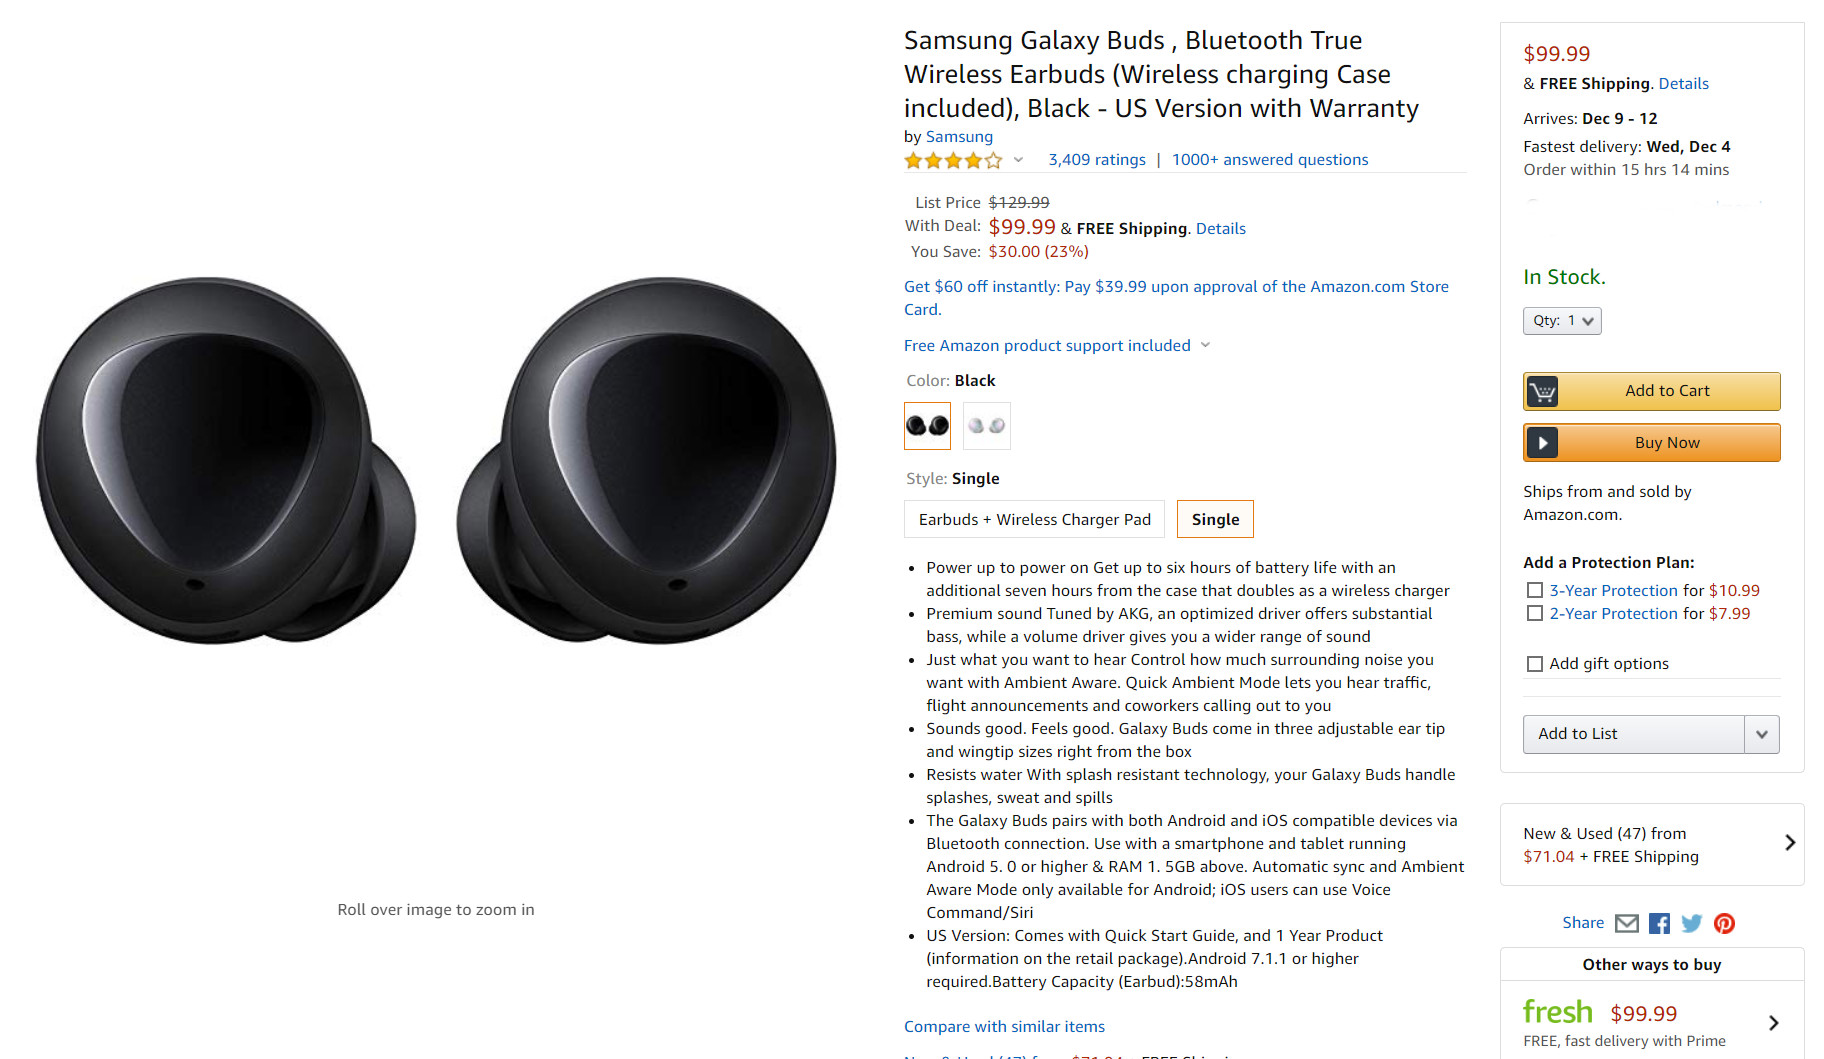 A Samsung Galaxy Buds deal via Amazon.